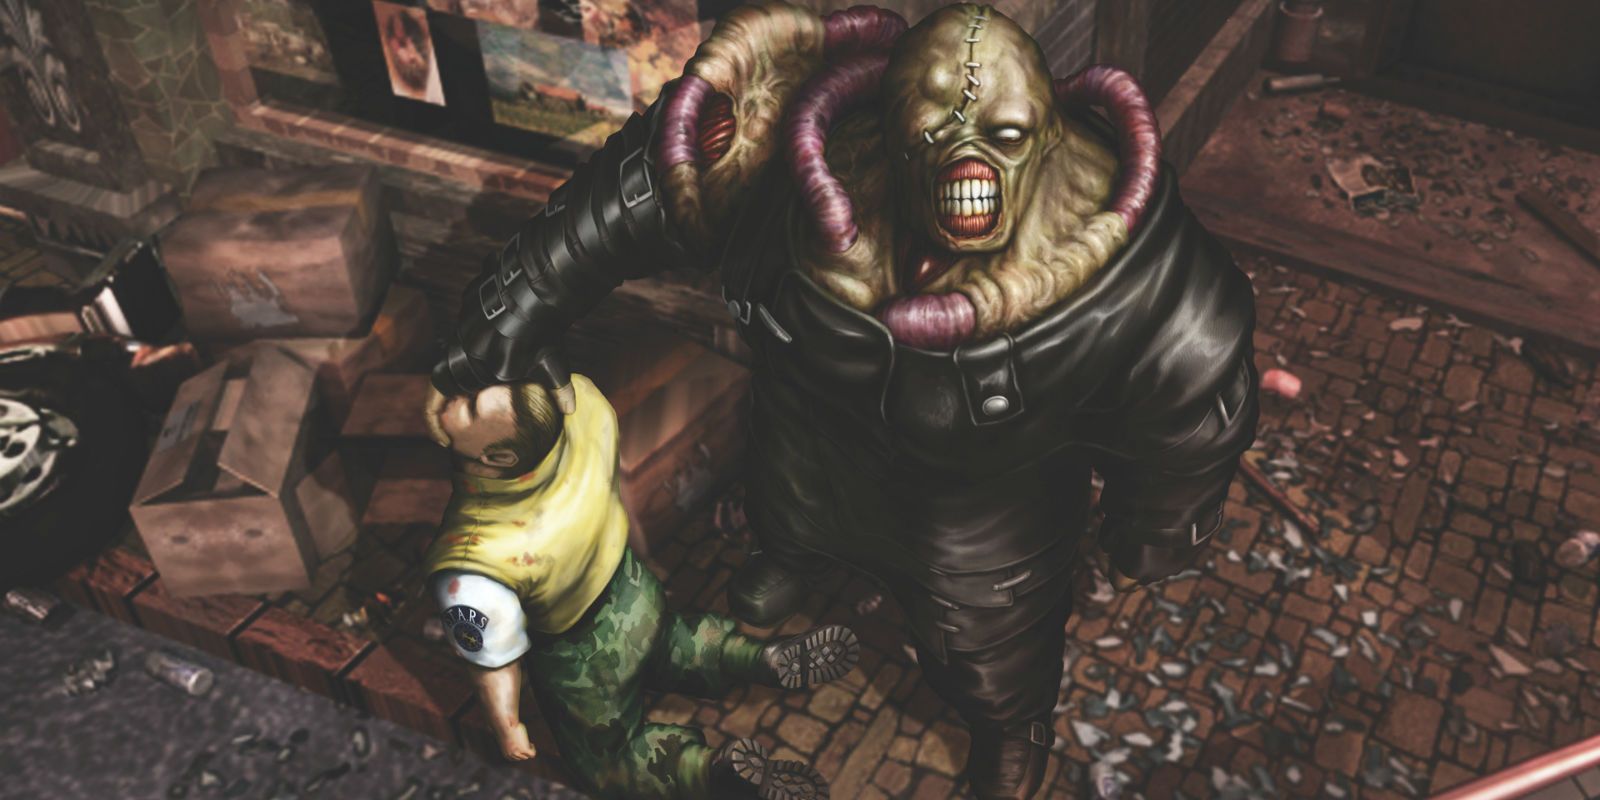 Nemesis attacks a victim in Resident Evil 3 